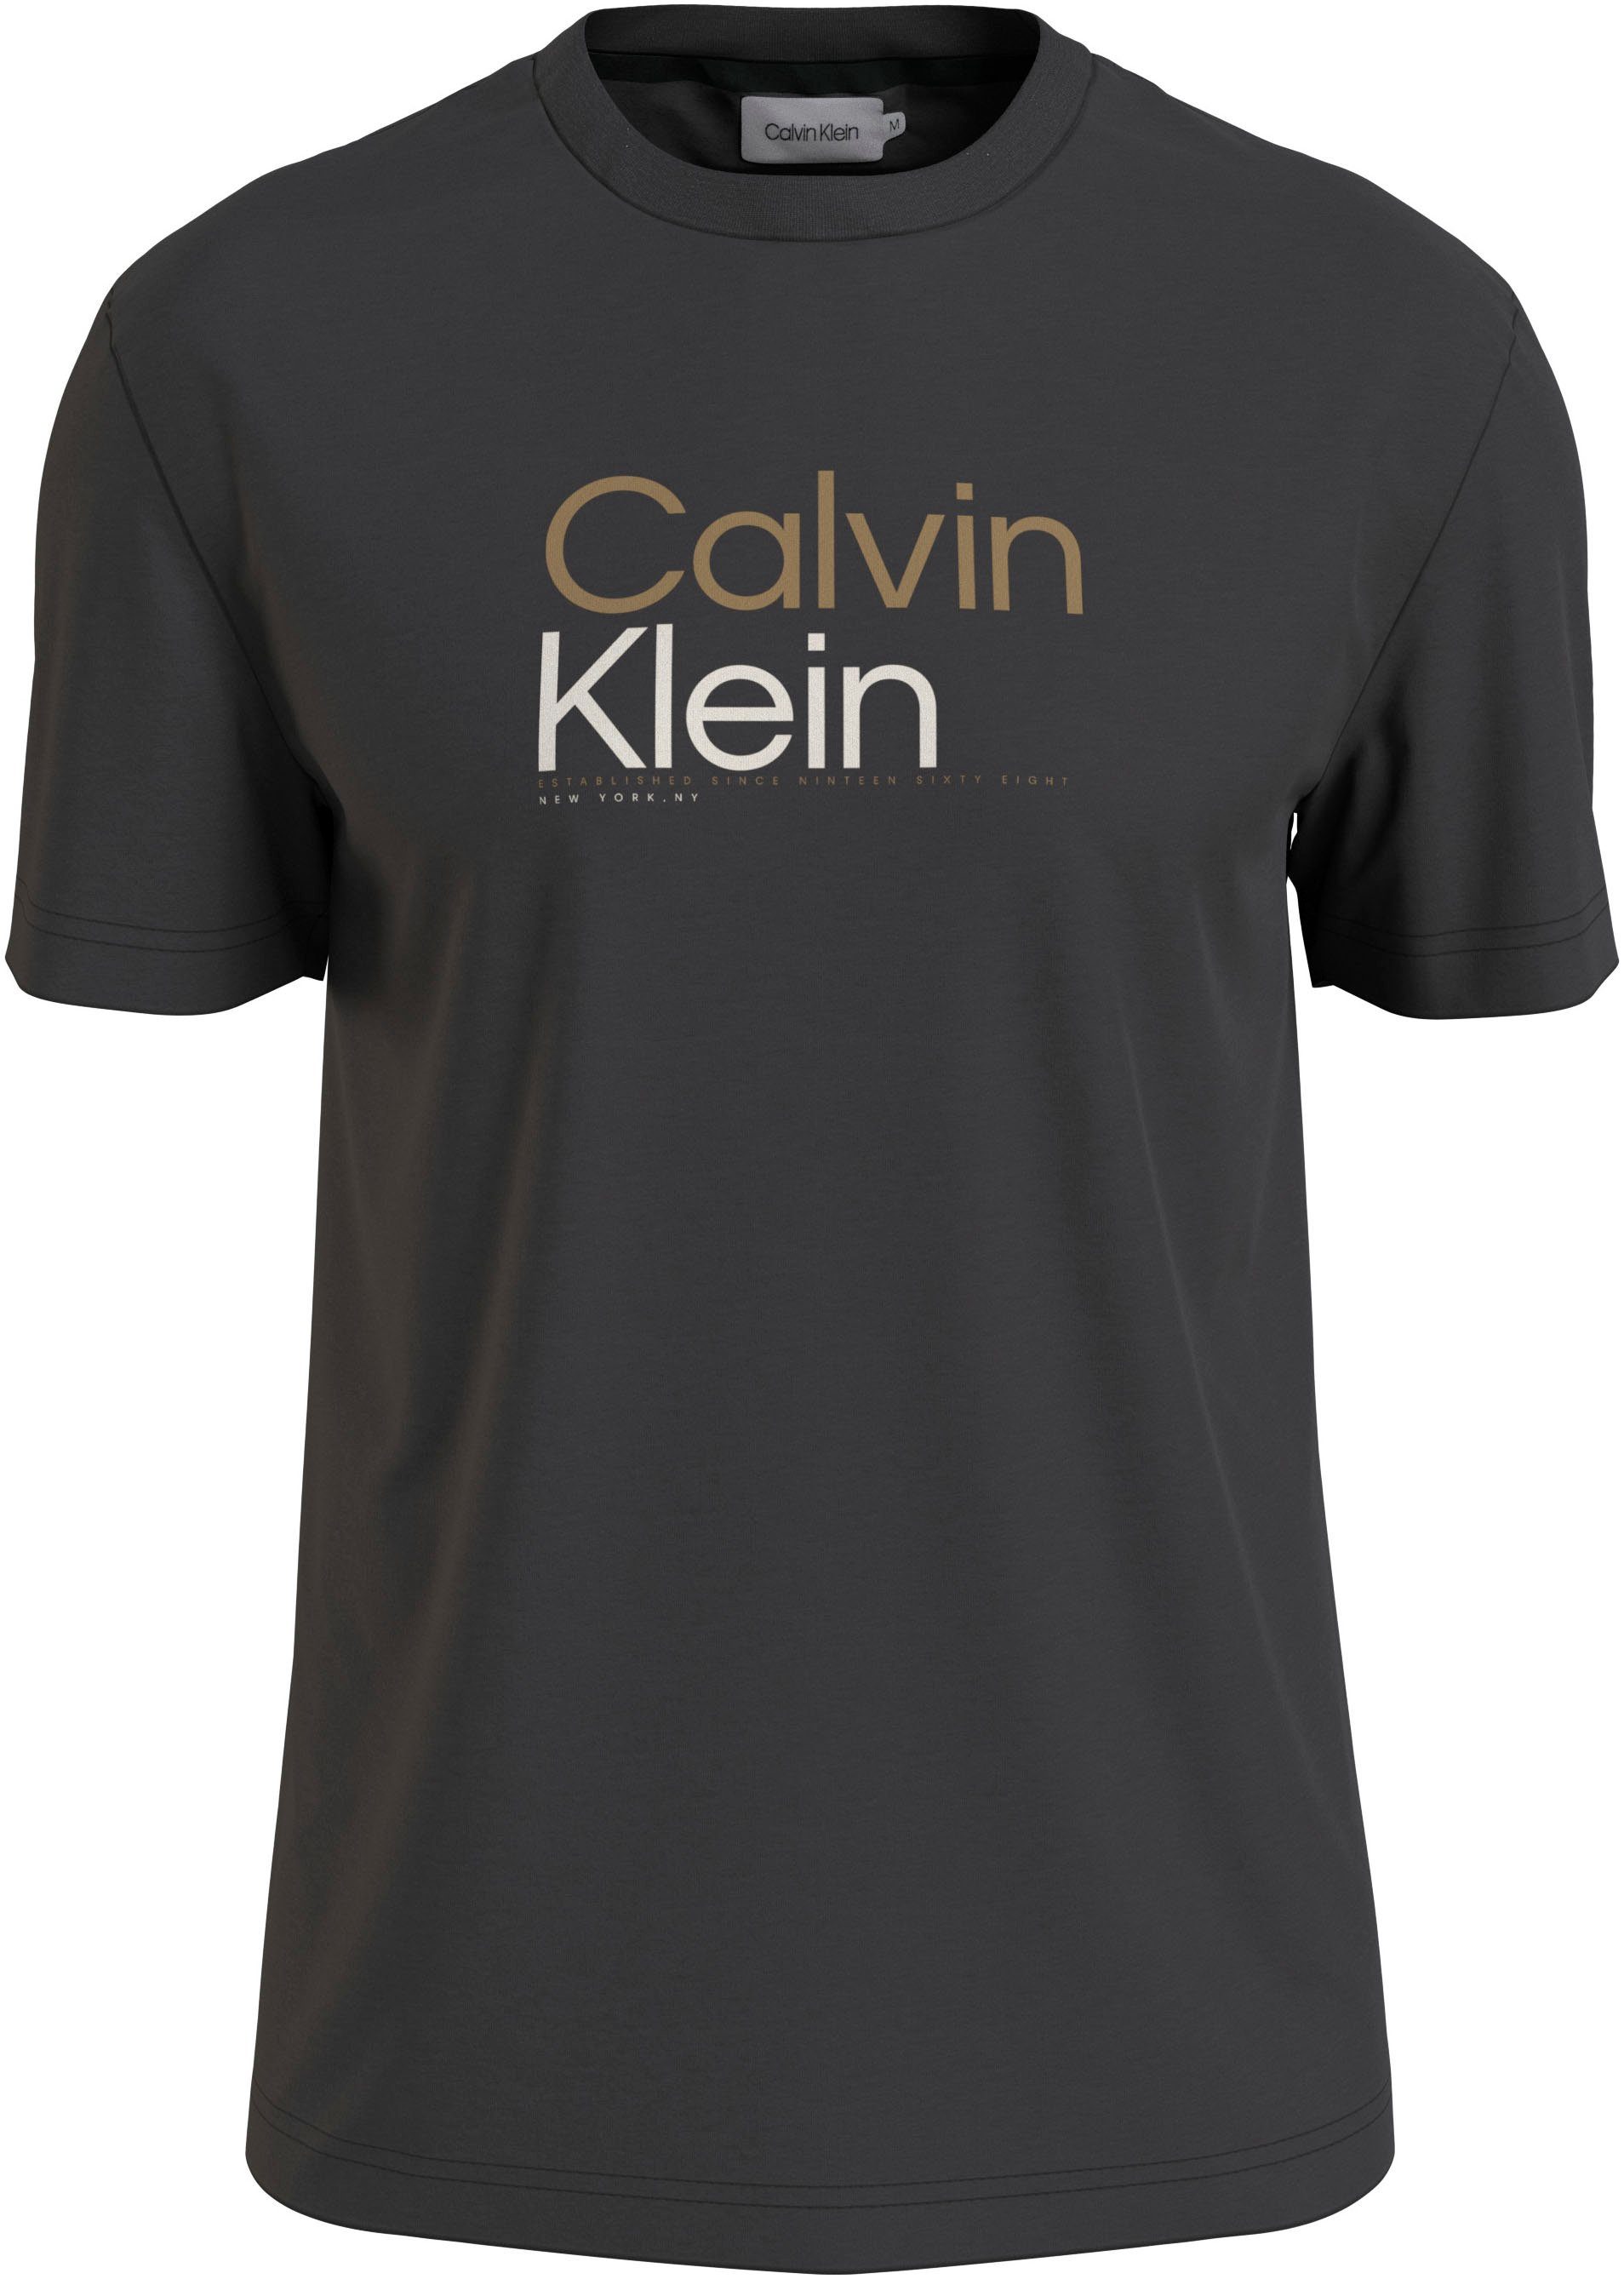 Calvin Klein Big&Tall T-SHIRT LOGO BT_MULTI T-Shirt mit Markenlabel COLOR